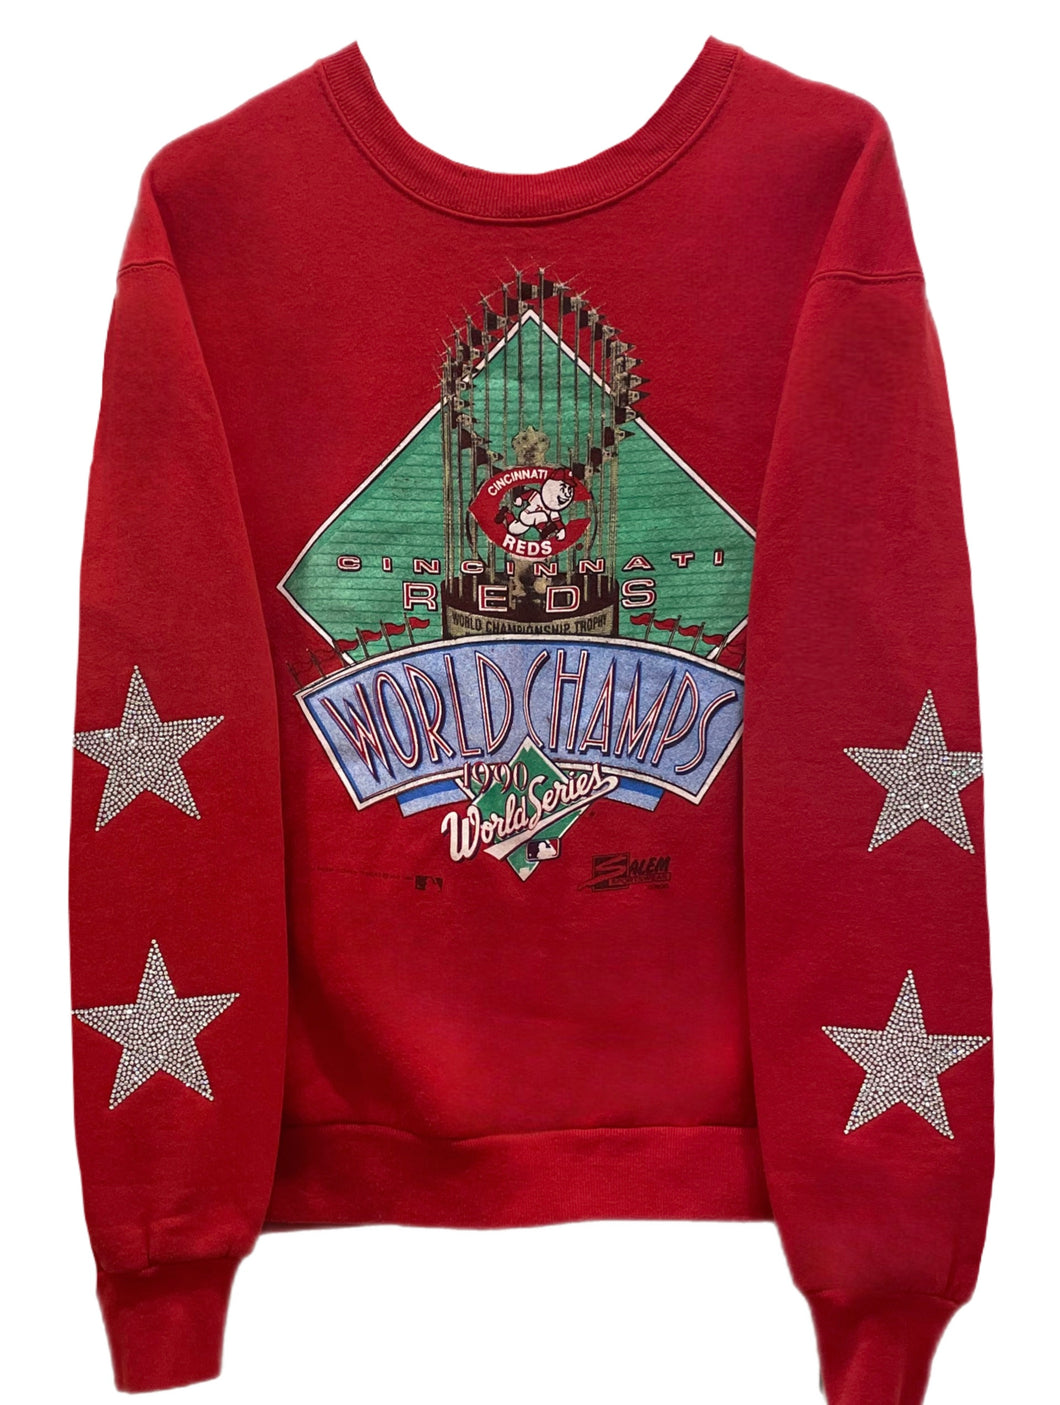 Cincinnati Reds, MLB One of a KIND Vintage Sweatshirt with Crystal Star Design.